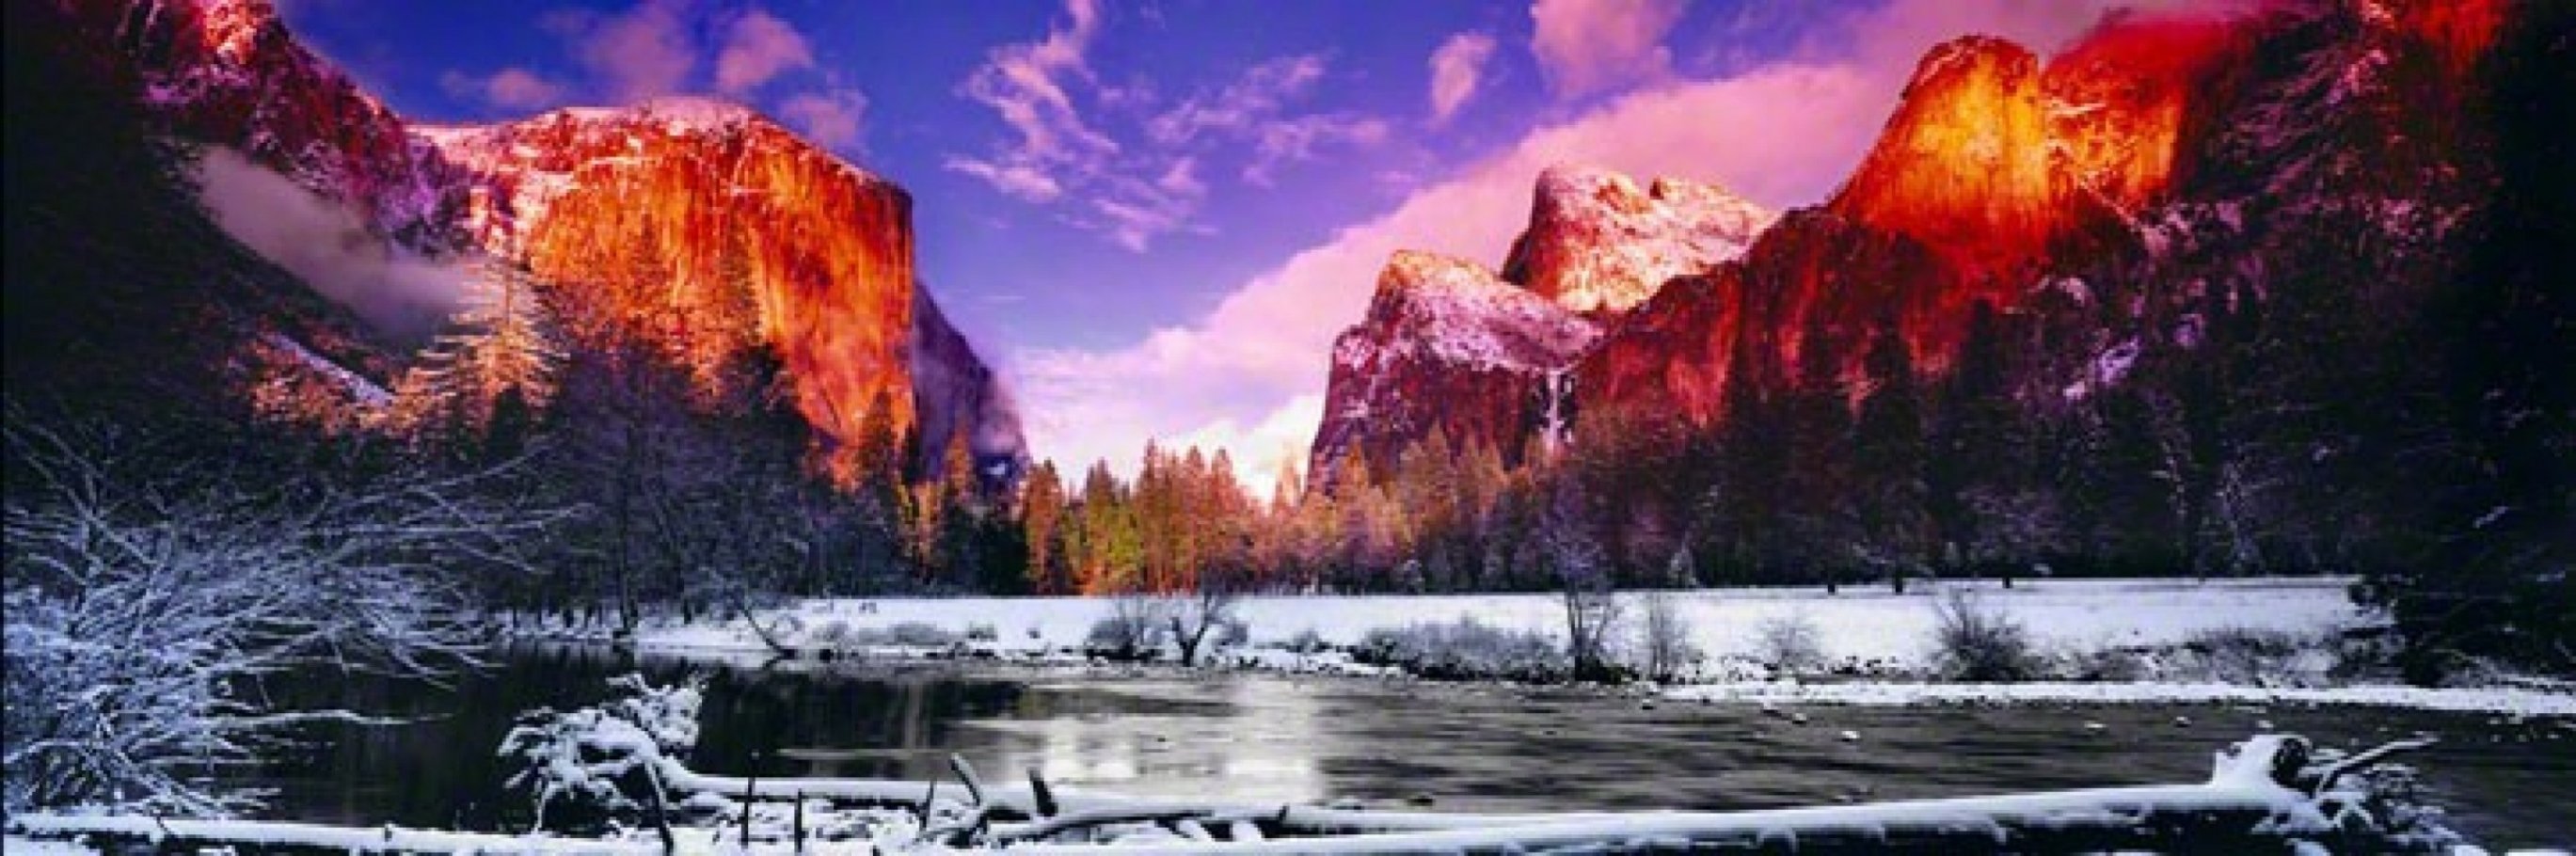 Icy Waters (Yosemite NP, California) 1.5M Huge Panorama by Peter Lik